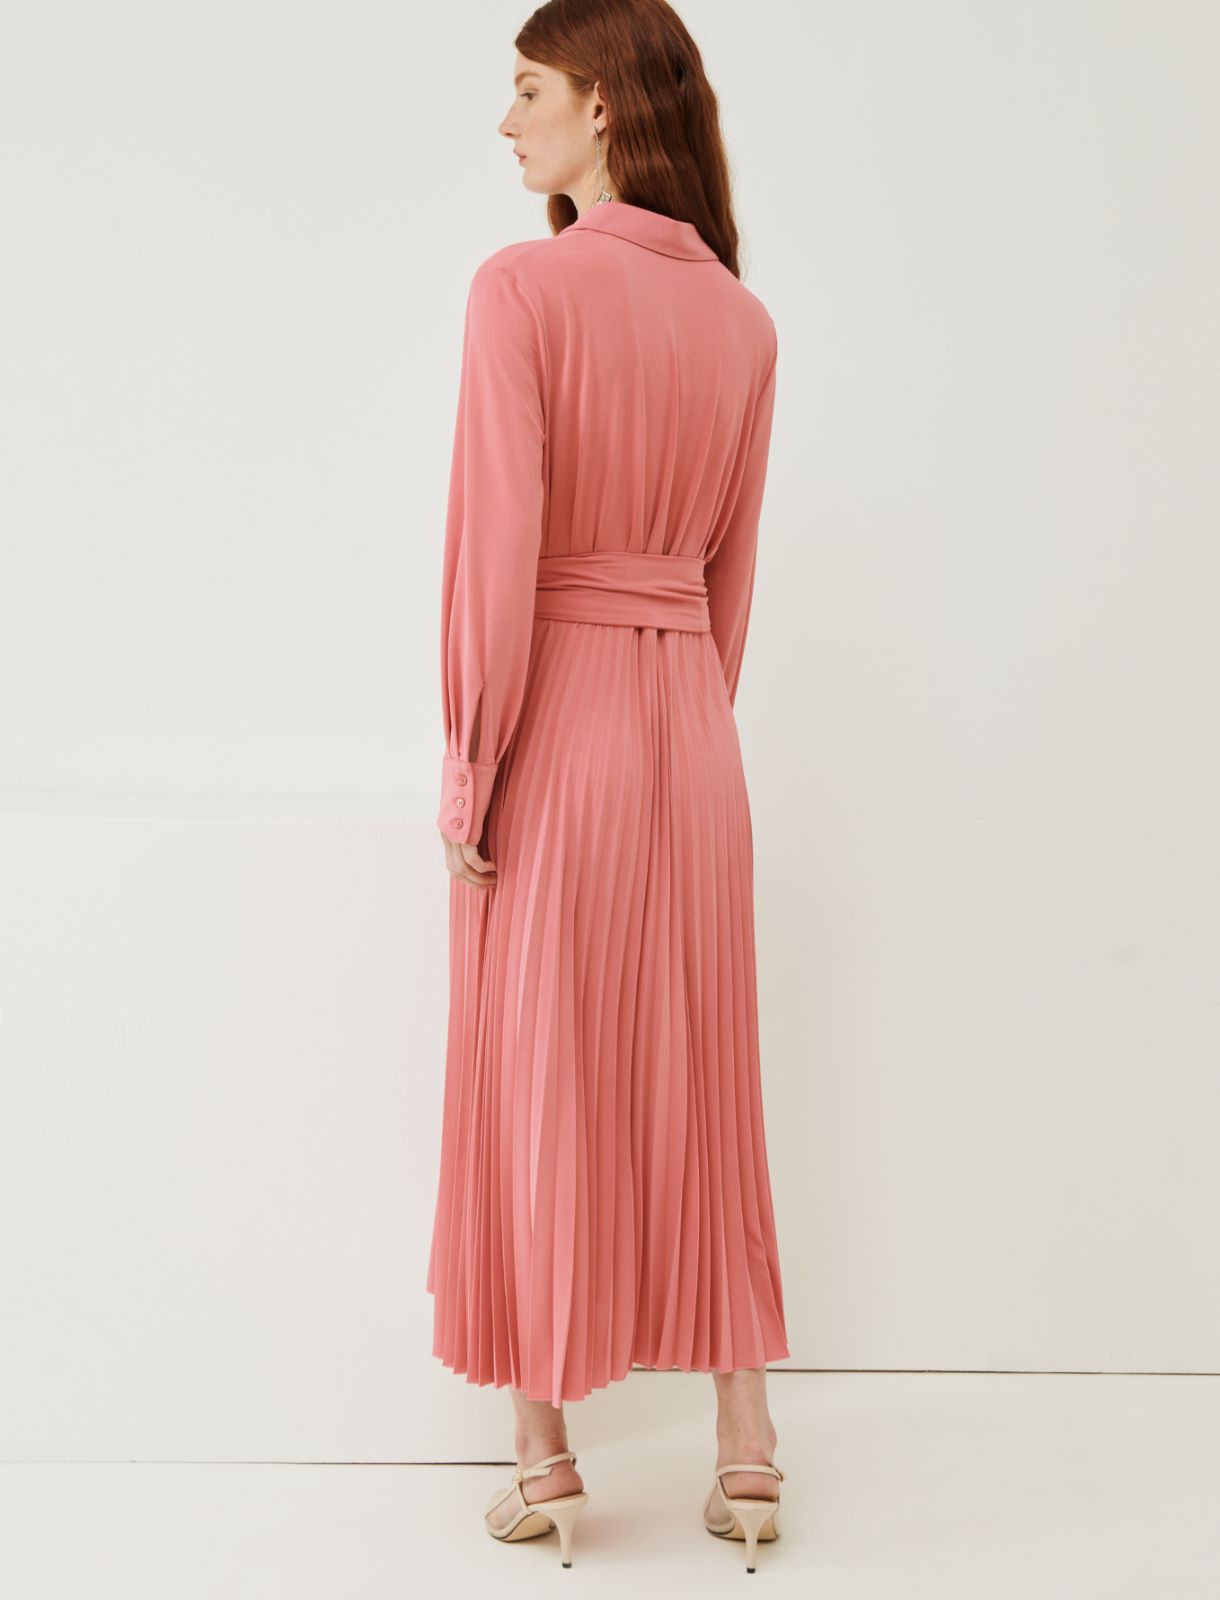 Pleated dress - Geranium - Marina Rinaldi - 2